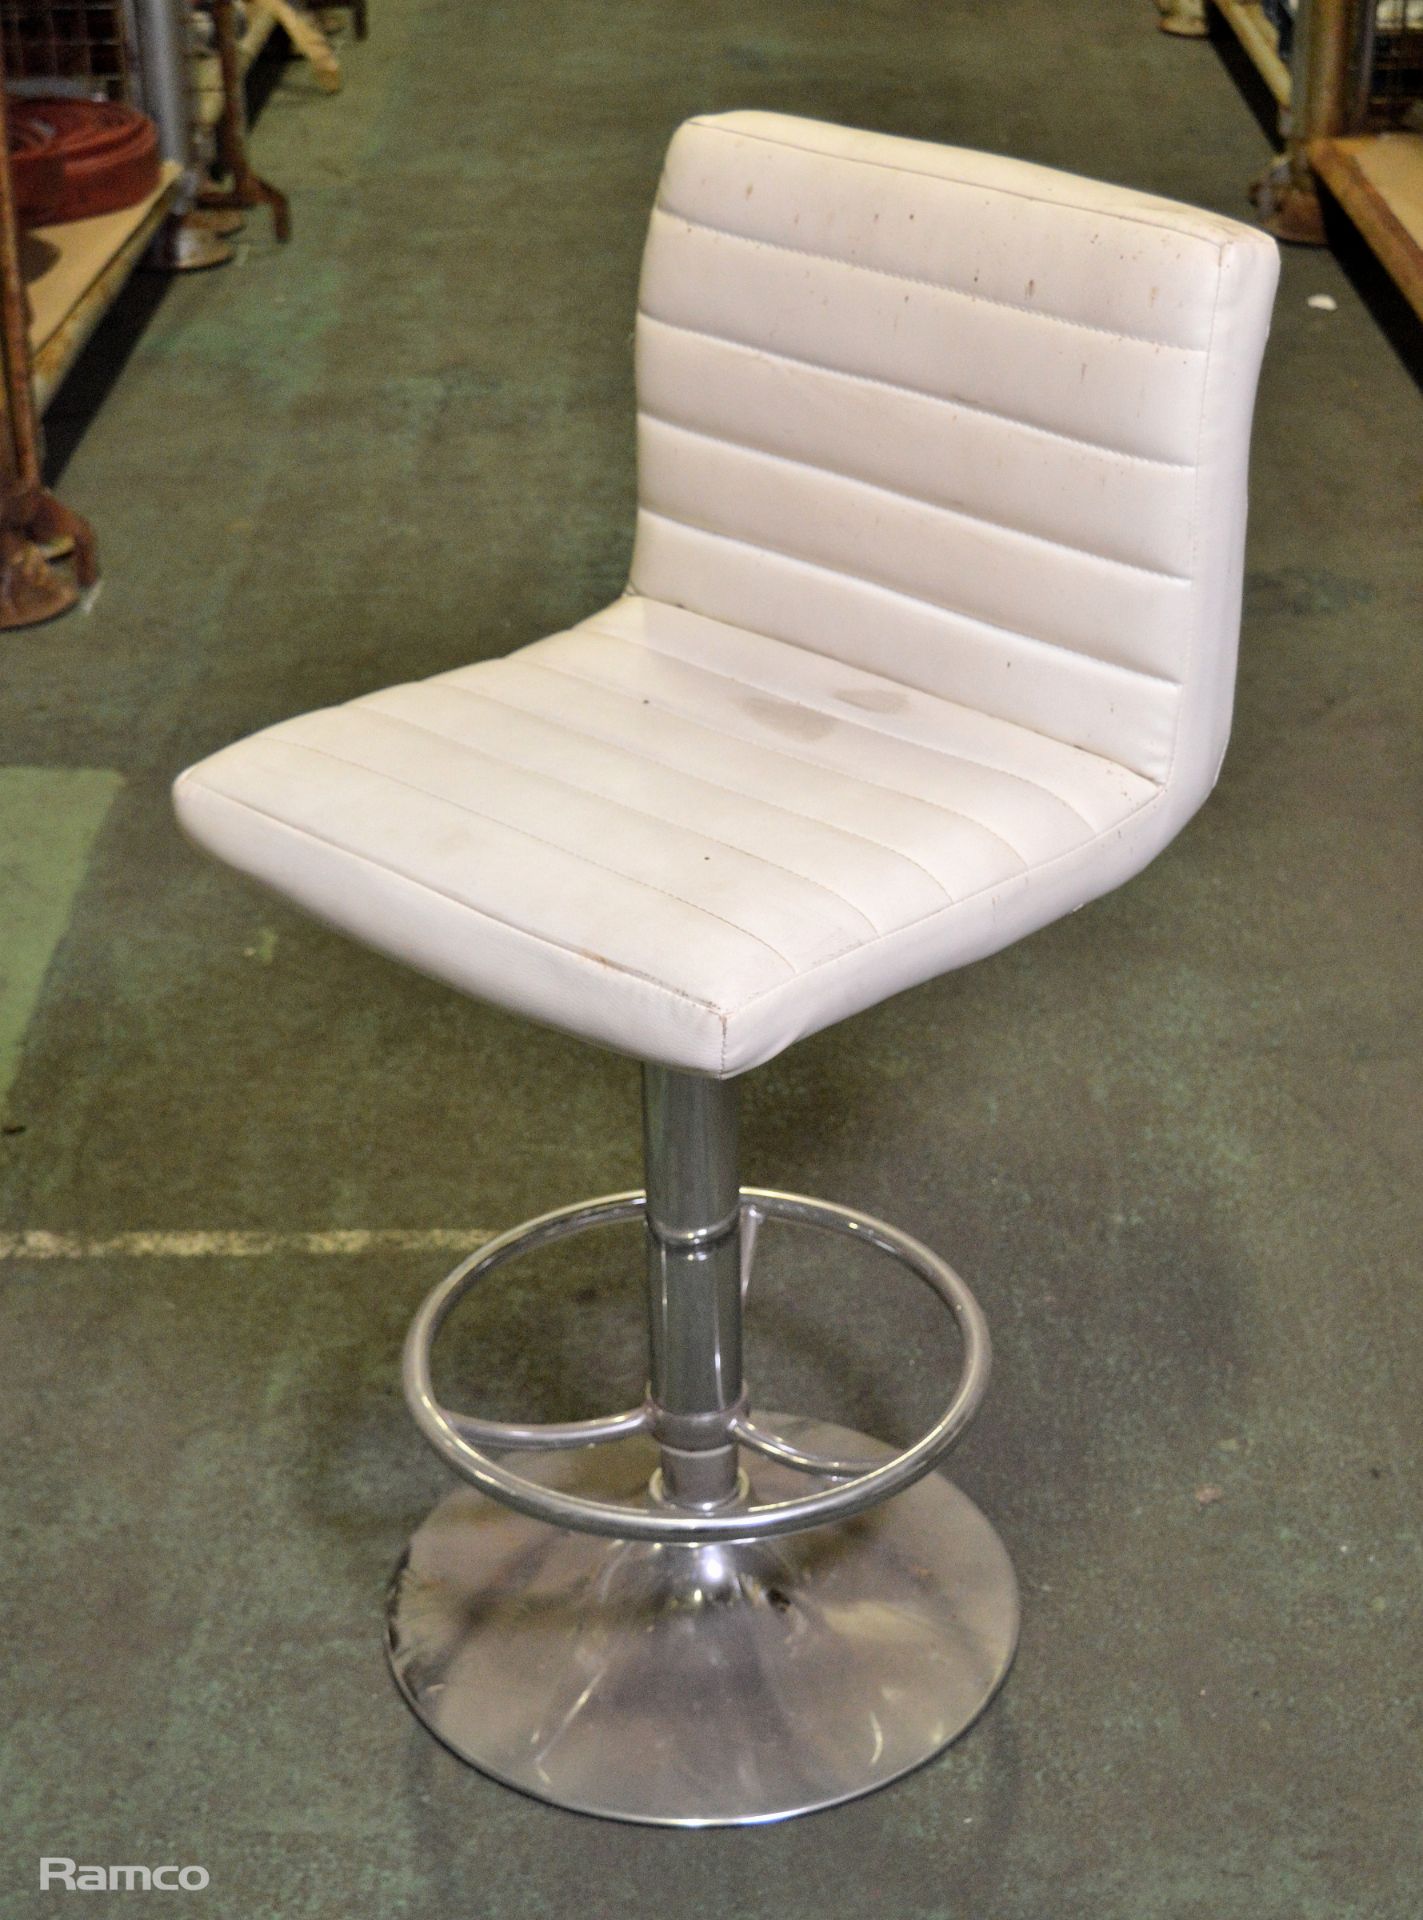 4x Stainless steel breakfast bar stools - cream seat - Image 2 of 3